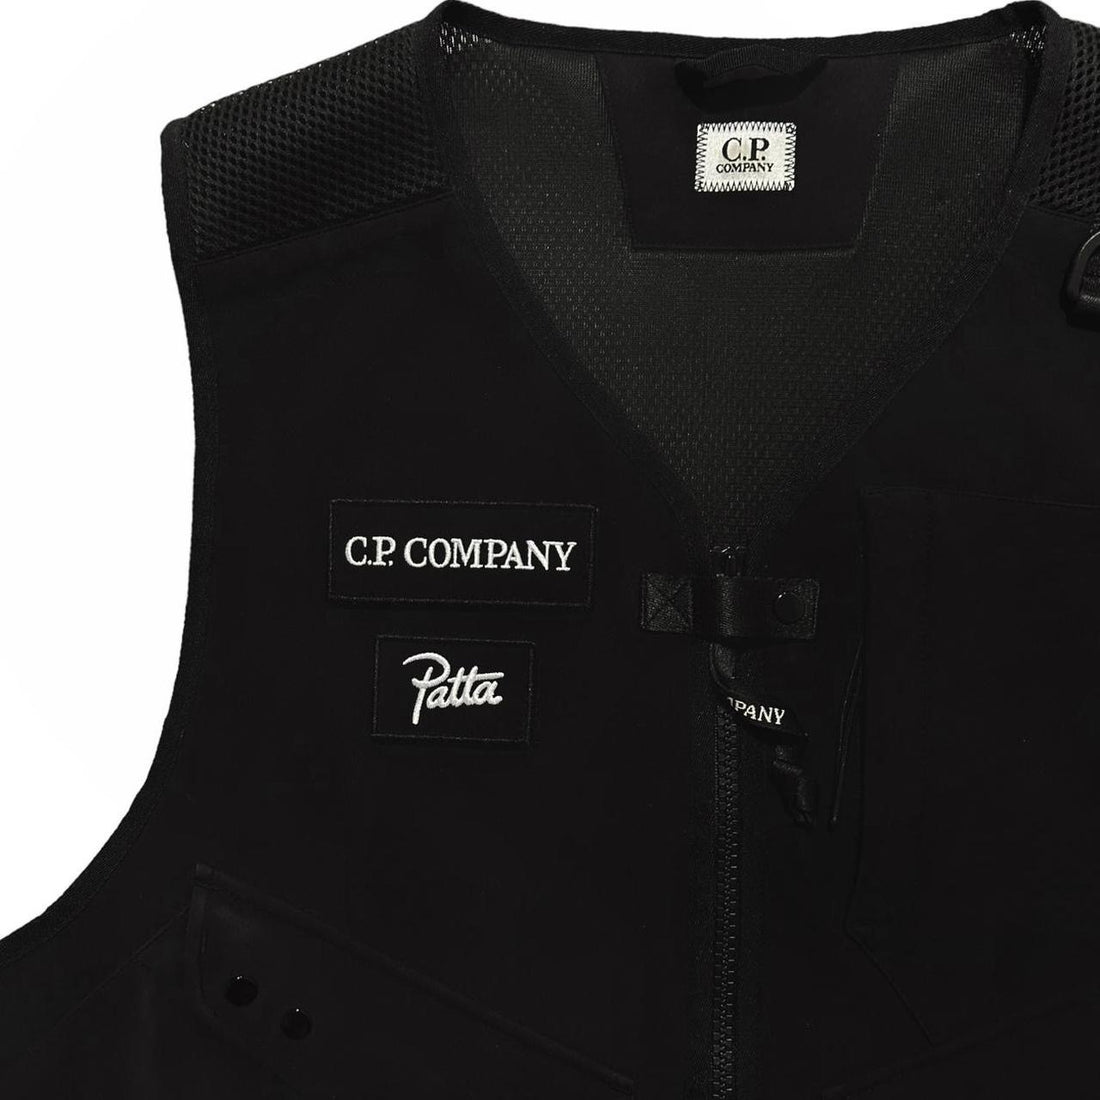 CP Company Patta tactical vest